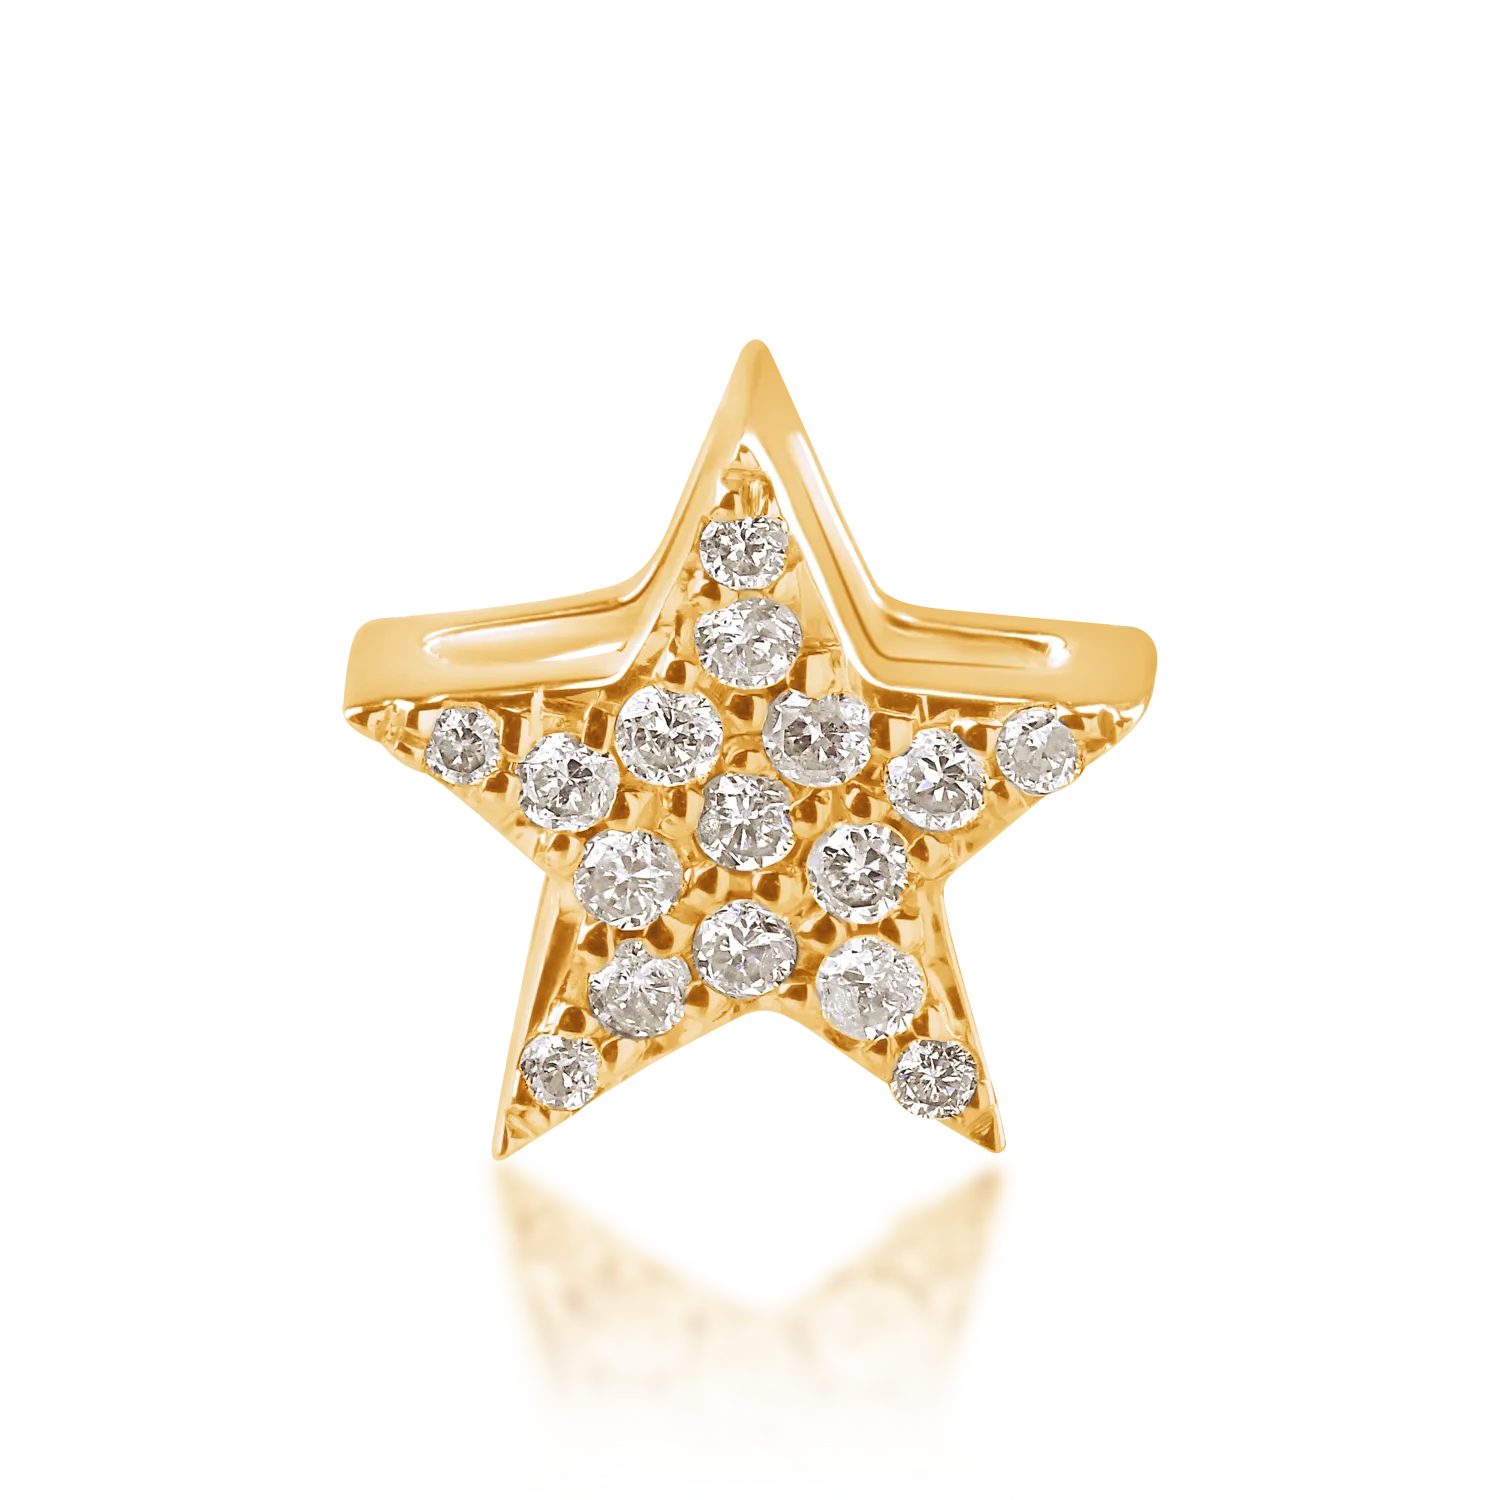 Yellow gold star pendant with 0.07ct diamonds